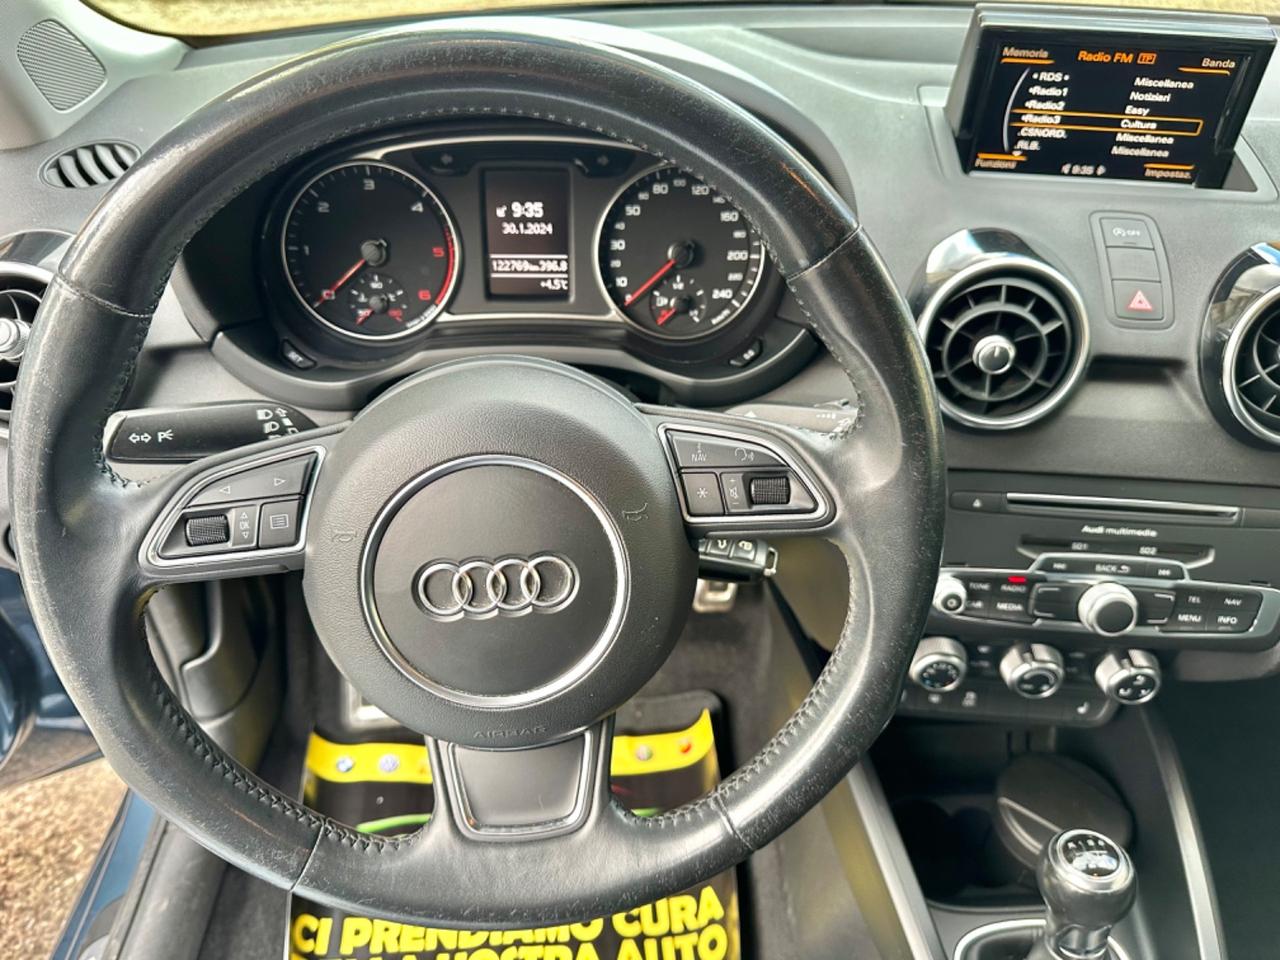 Audi A1 1.4 TDI Admired